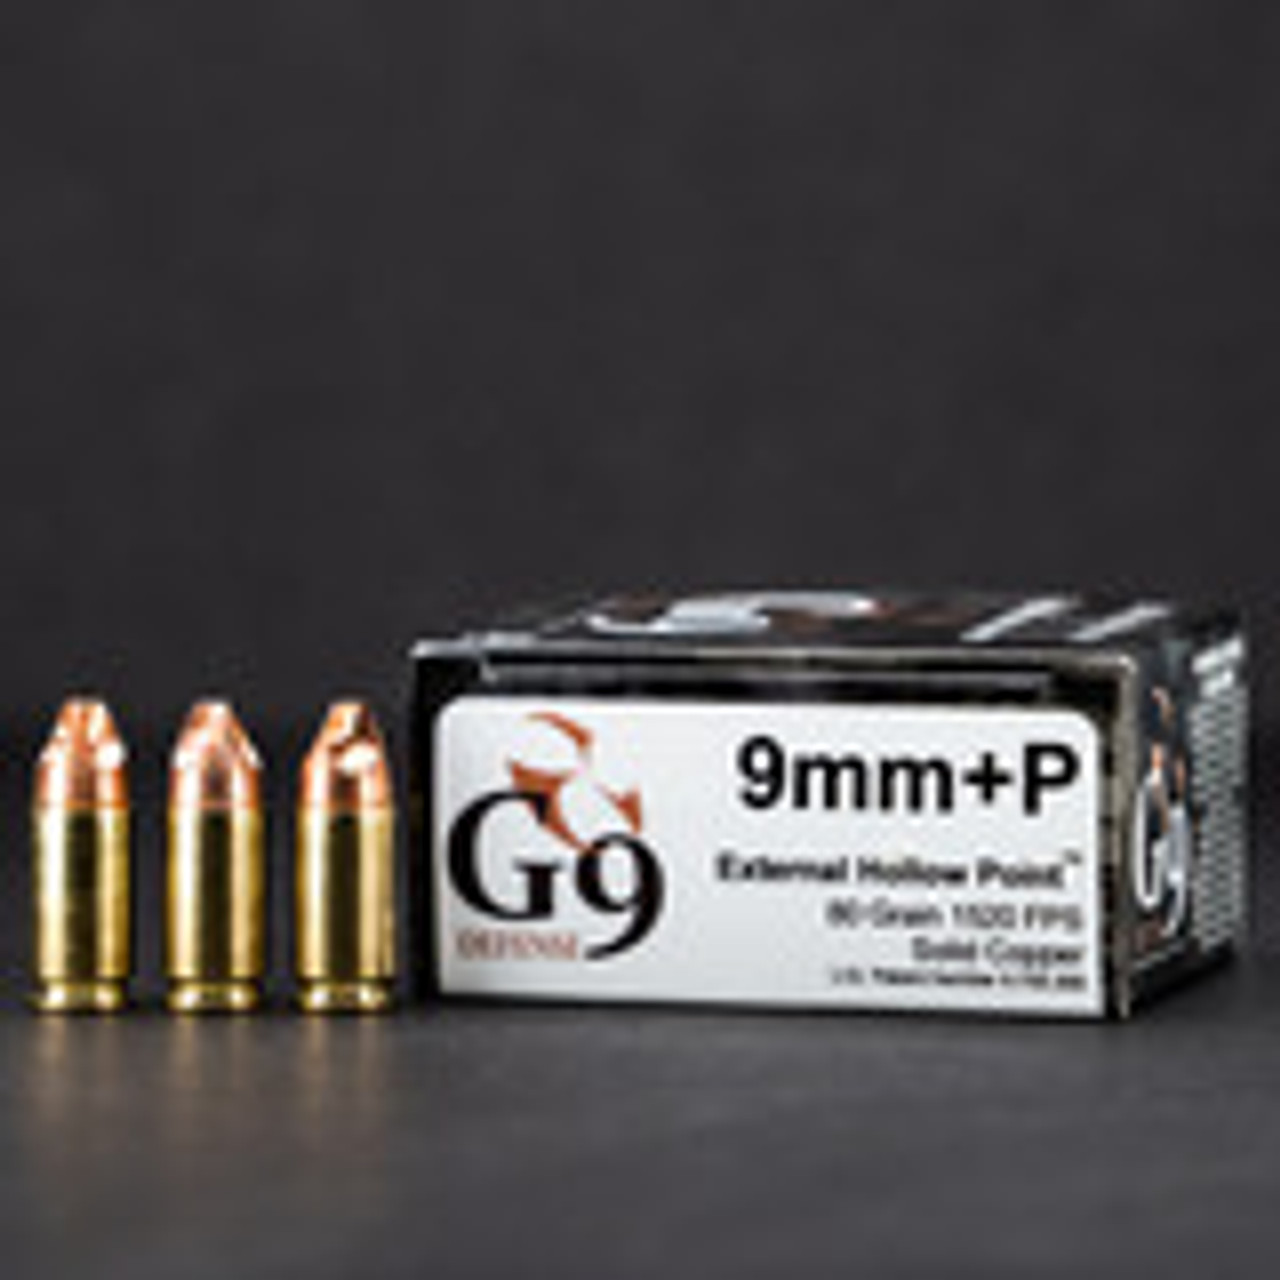 G9 Defense 9mm +P 80 gr Copper EHP 20ct Box